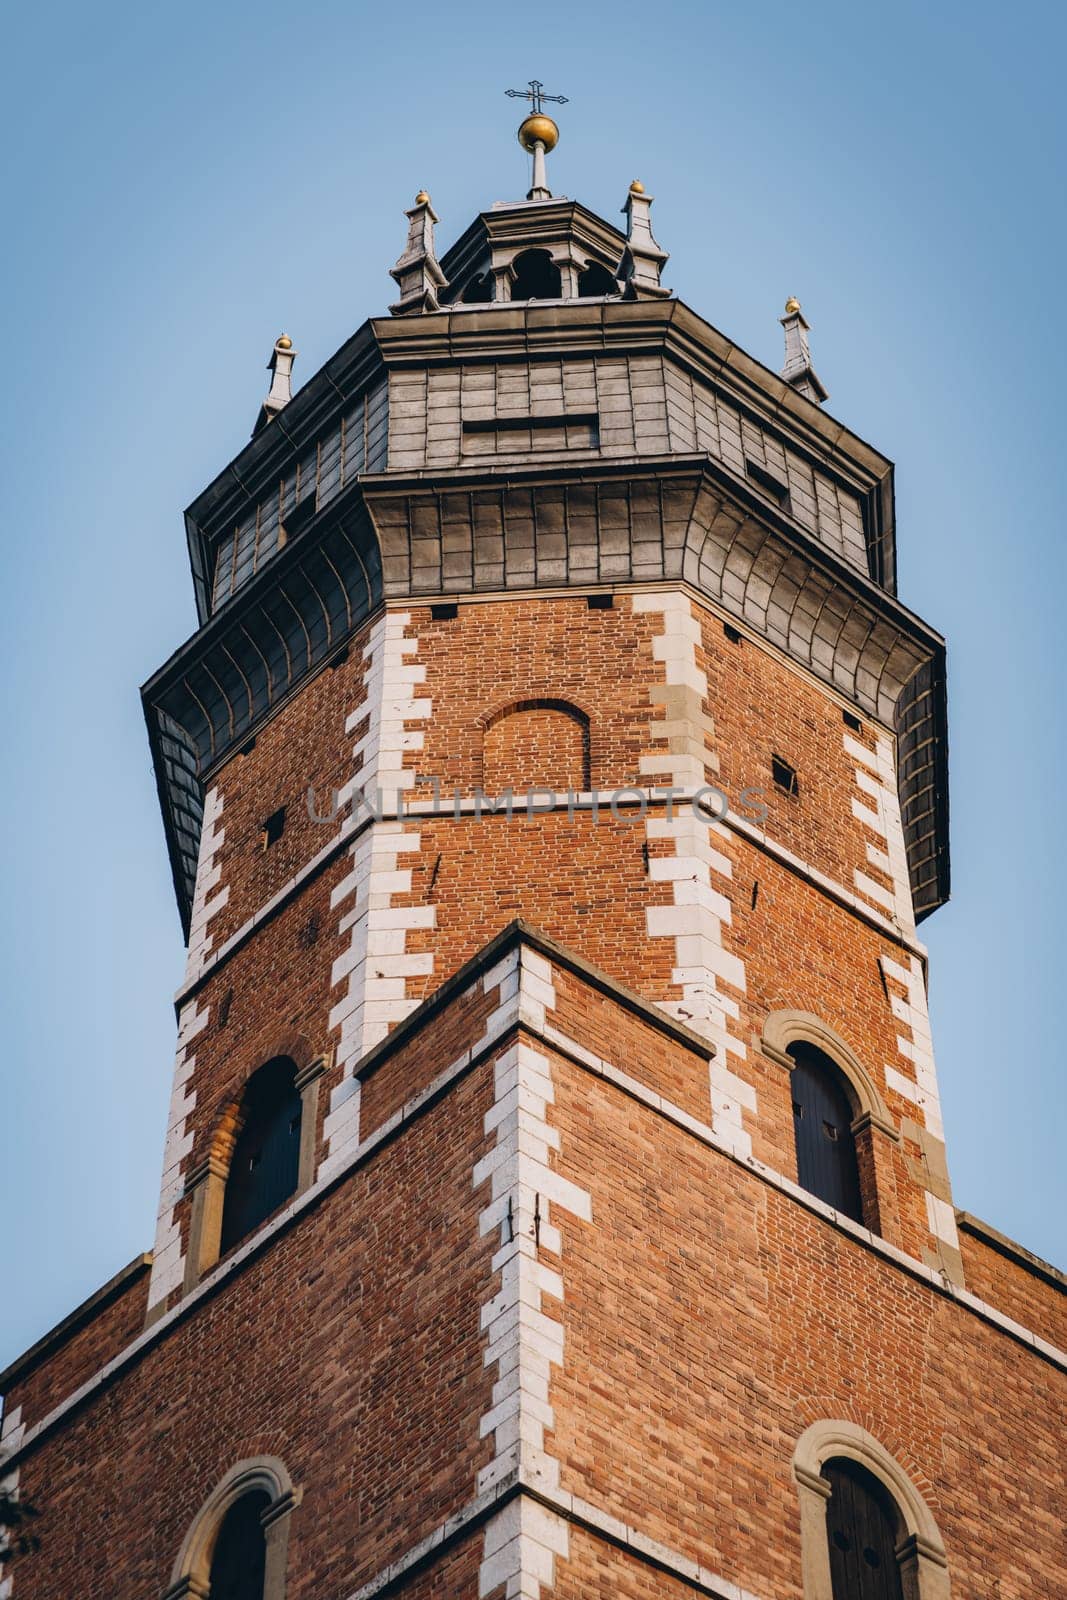 Corpus Christi Basilica brick red tower with arches on windows, Gothic church and landmark in Krakow, Poland